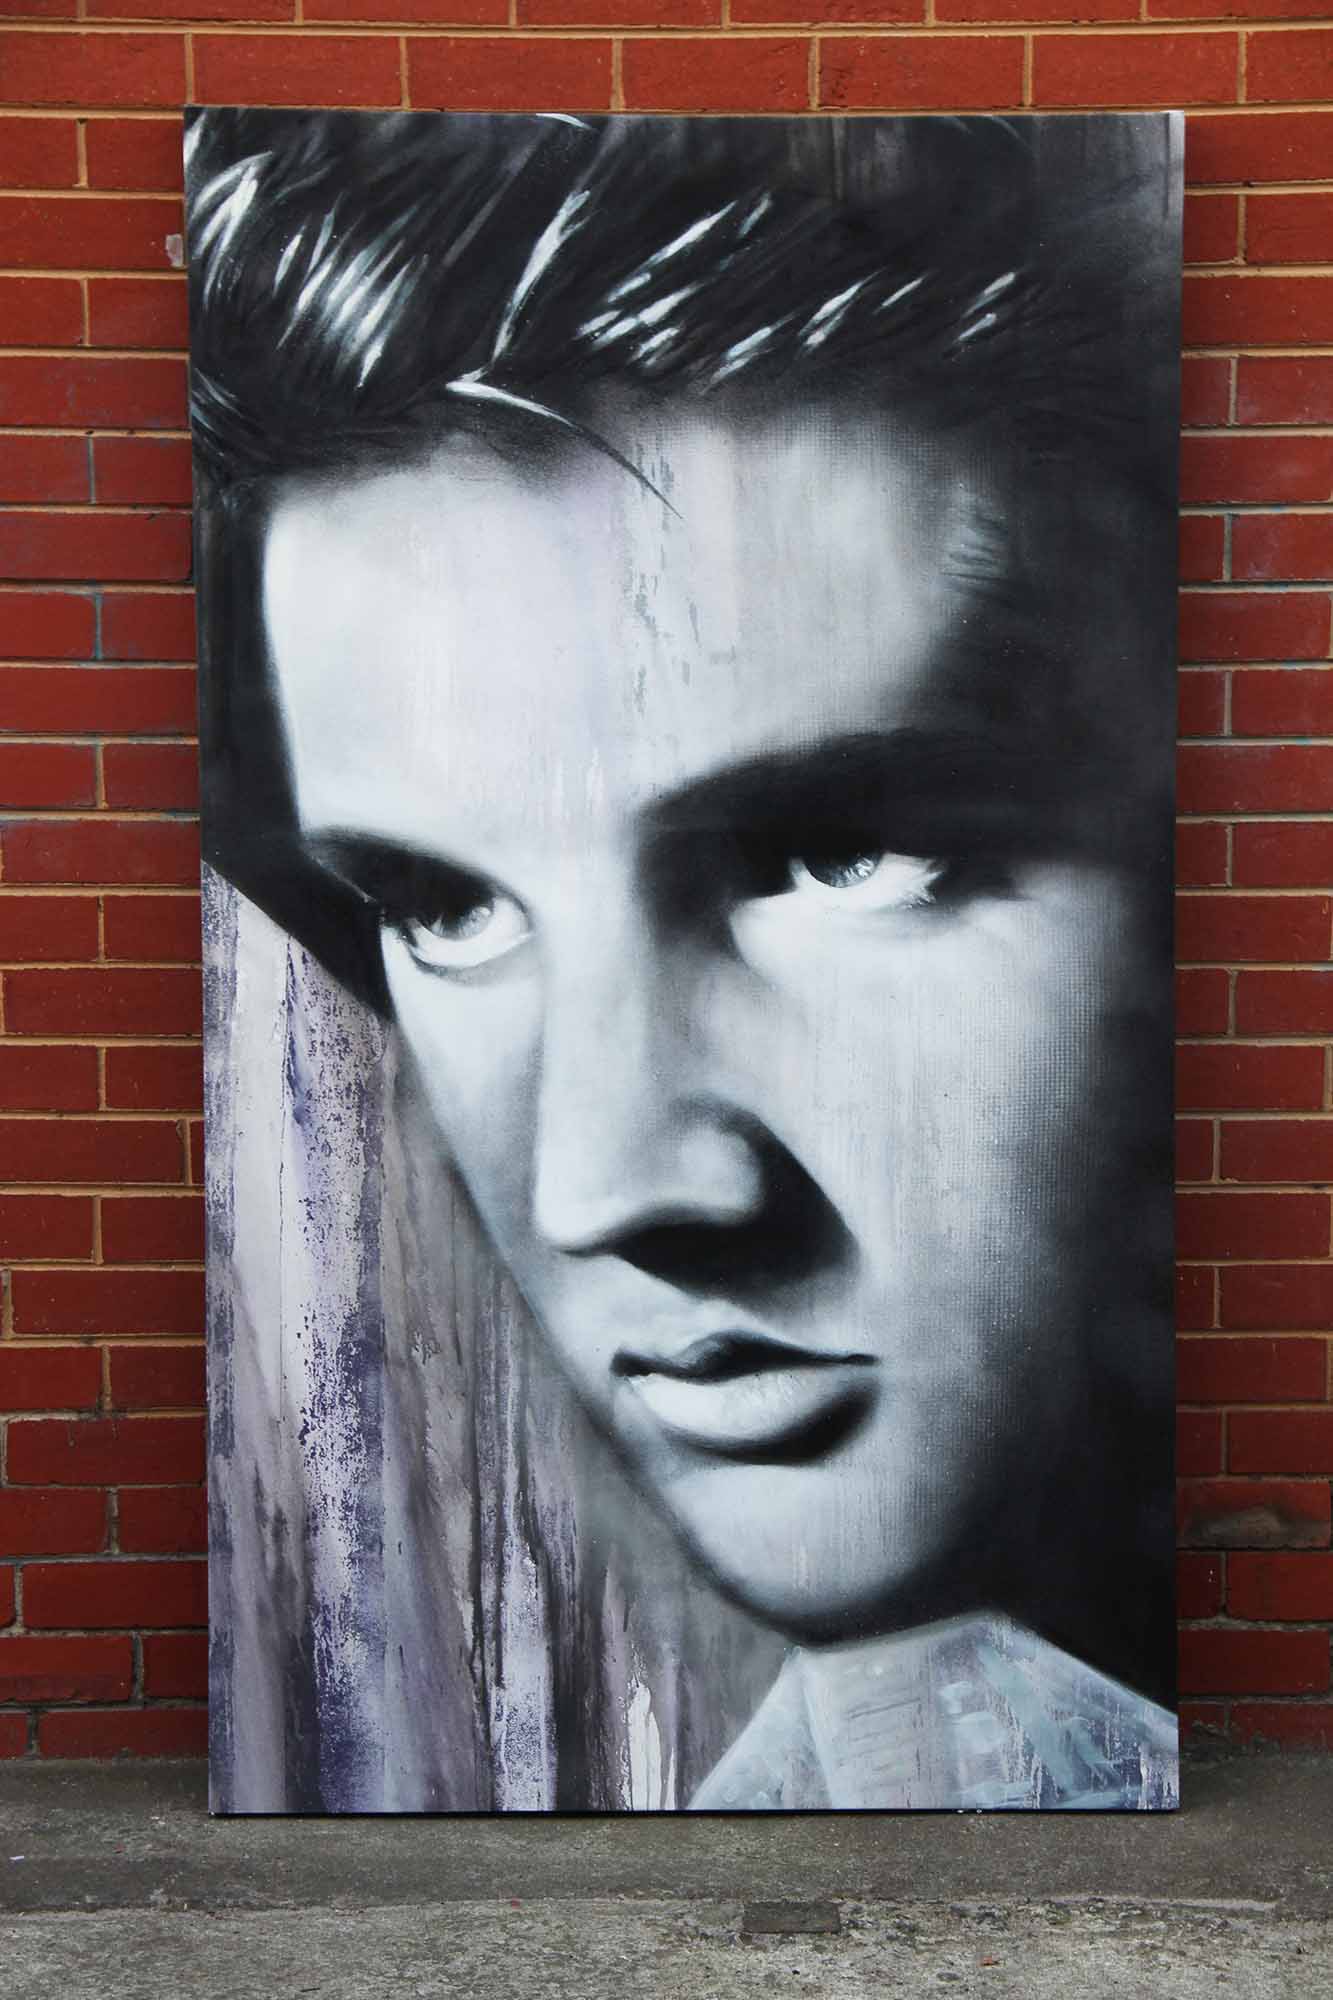 Mural portrait of Elvis Presley on canvas